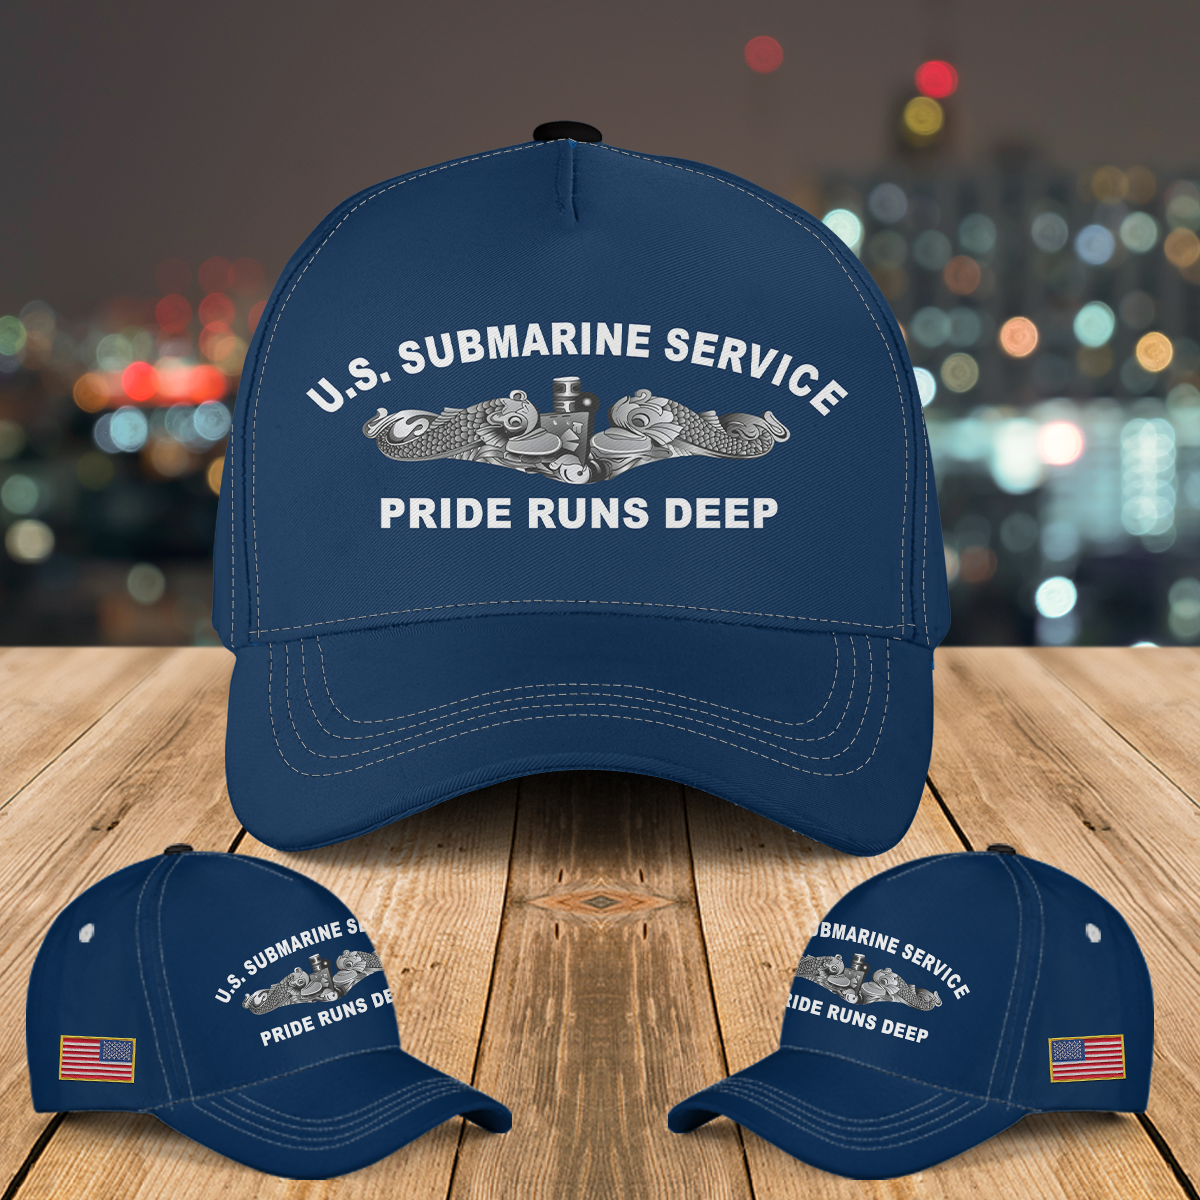 US Navy Submarine Service Pride Runs Deep with Silver Dolphins Baseball Cap